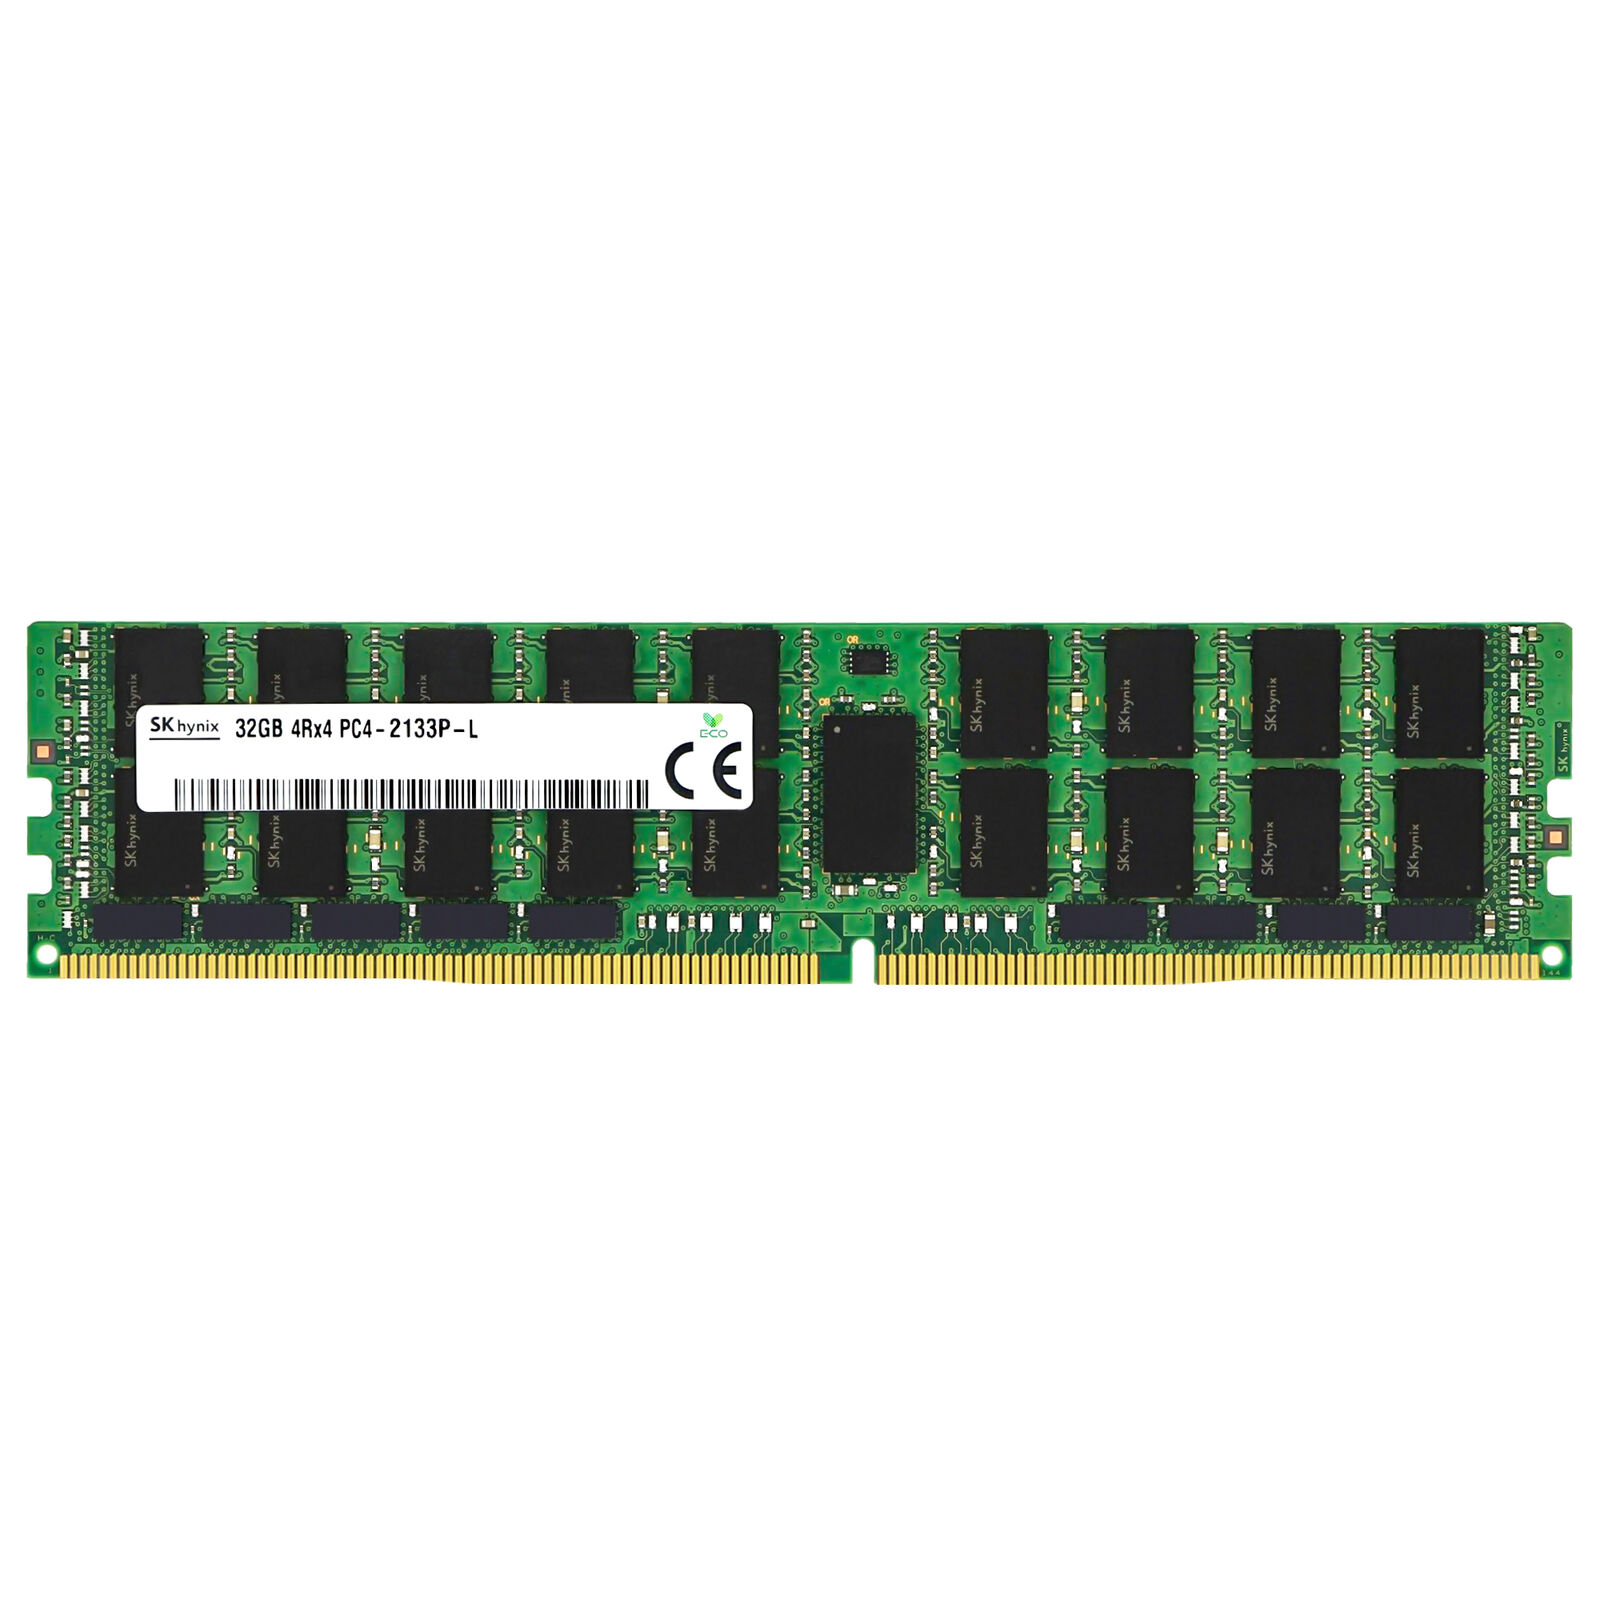 Hynix 32GB 4Rx4 PC4-2133P-L LRDIMM DDR4-17000 ECC Load Reduced Server Memory RAM